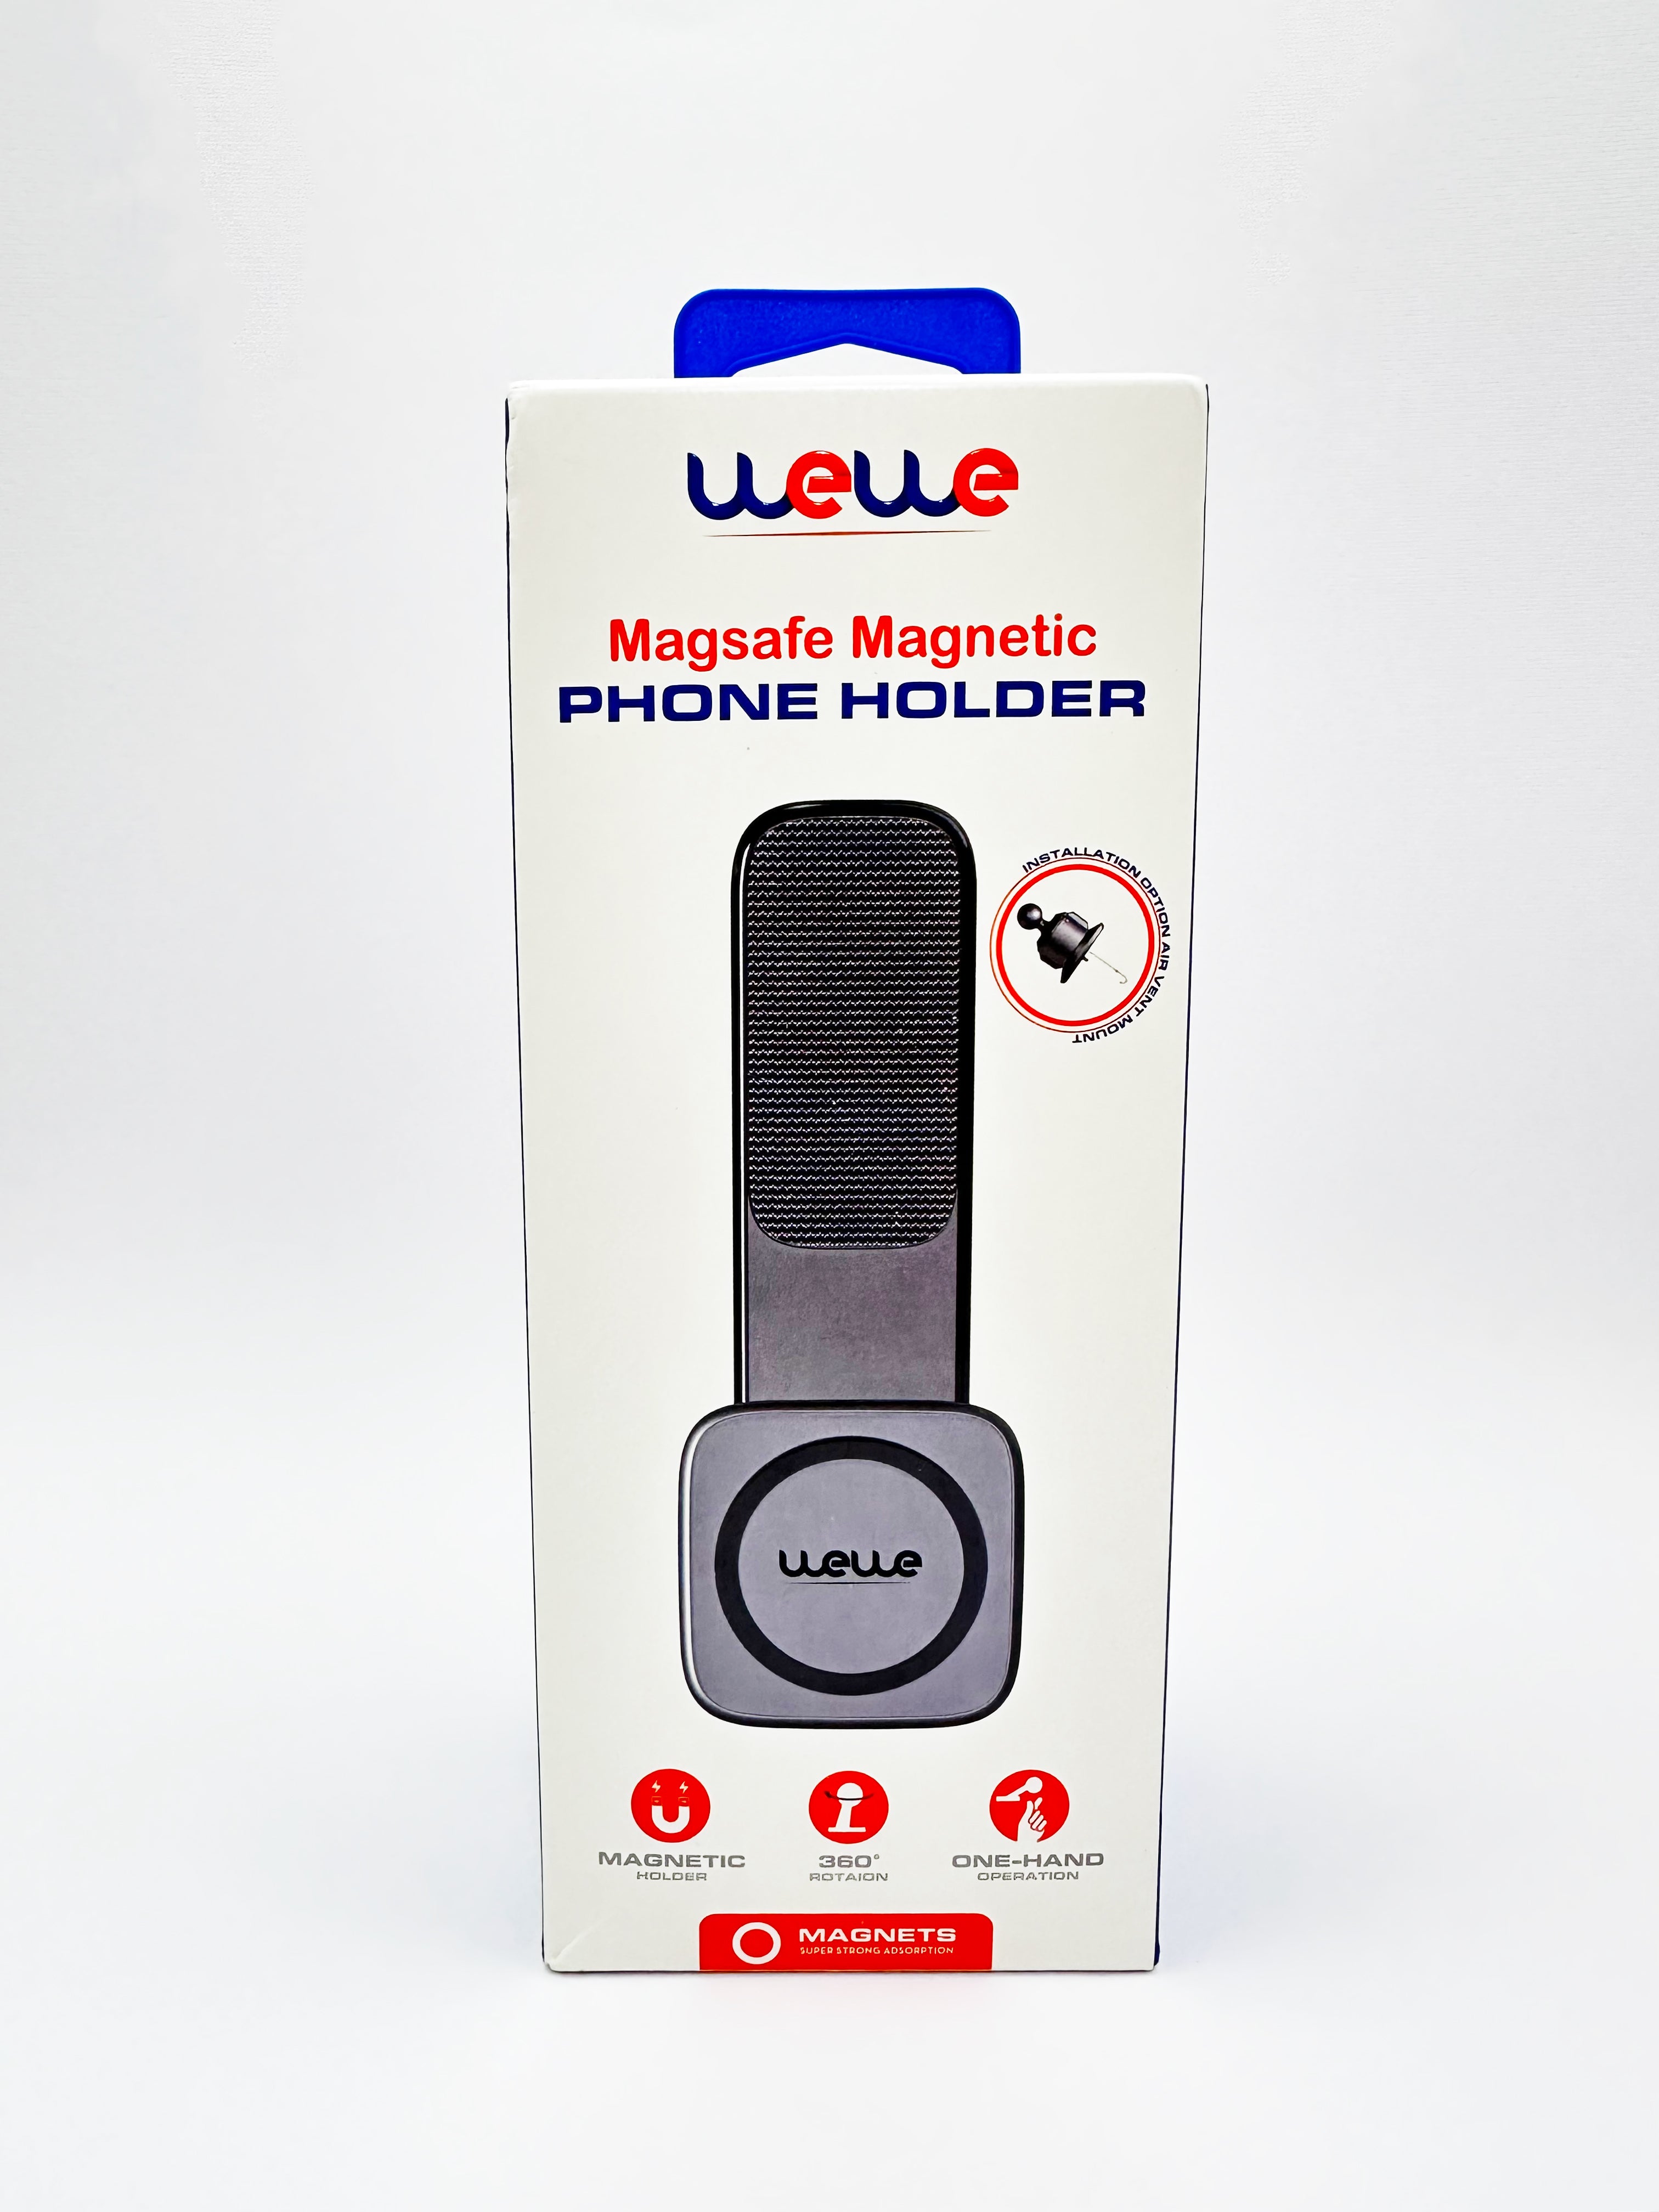 wewe magsafe magnetic phone holder ph-027